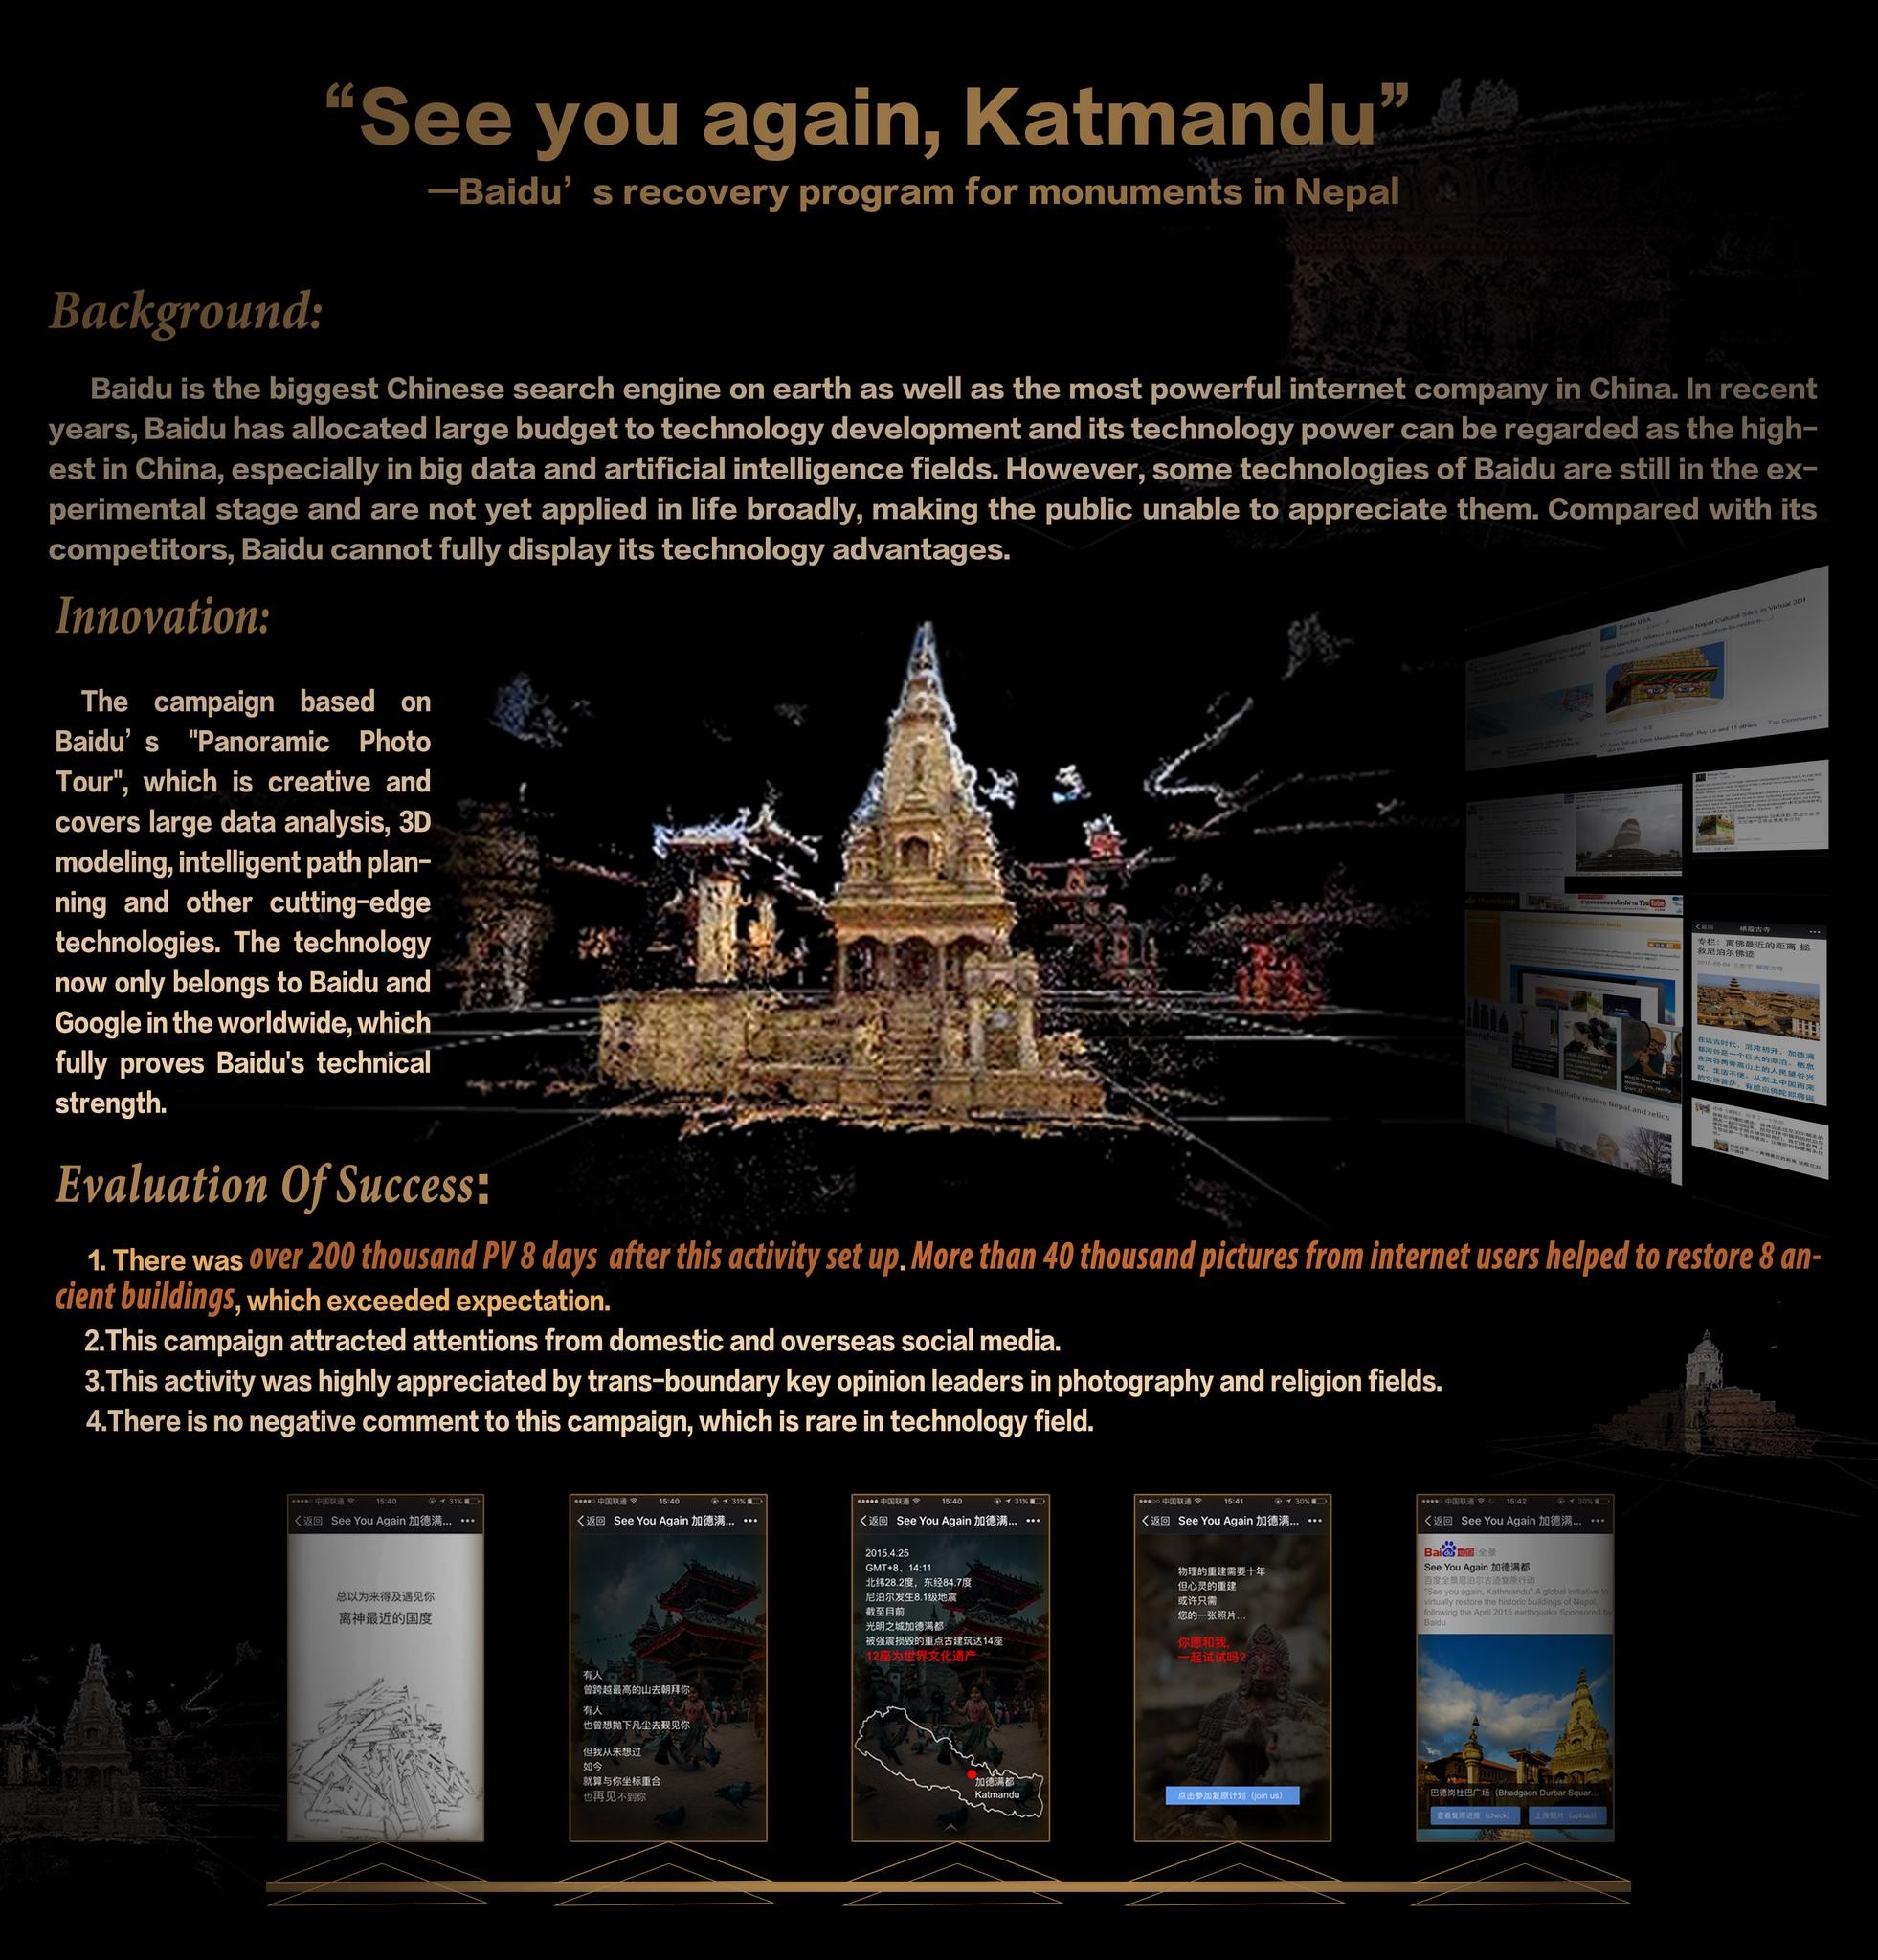 “See you again, Kathmandu”-- Baidu’s recovery program for monuments in Nepal.